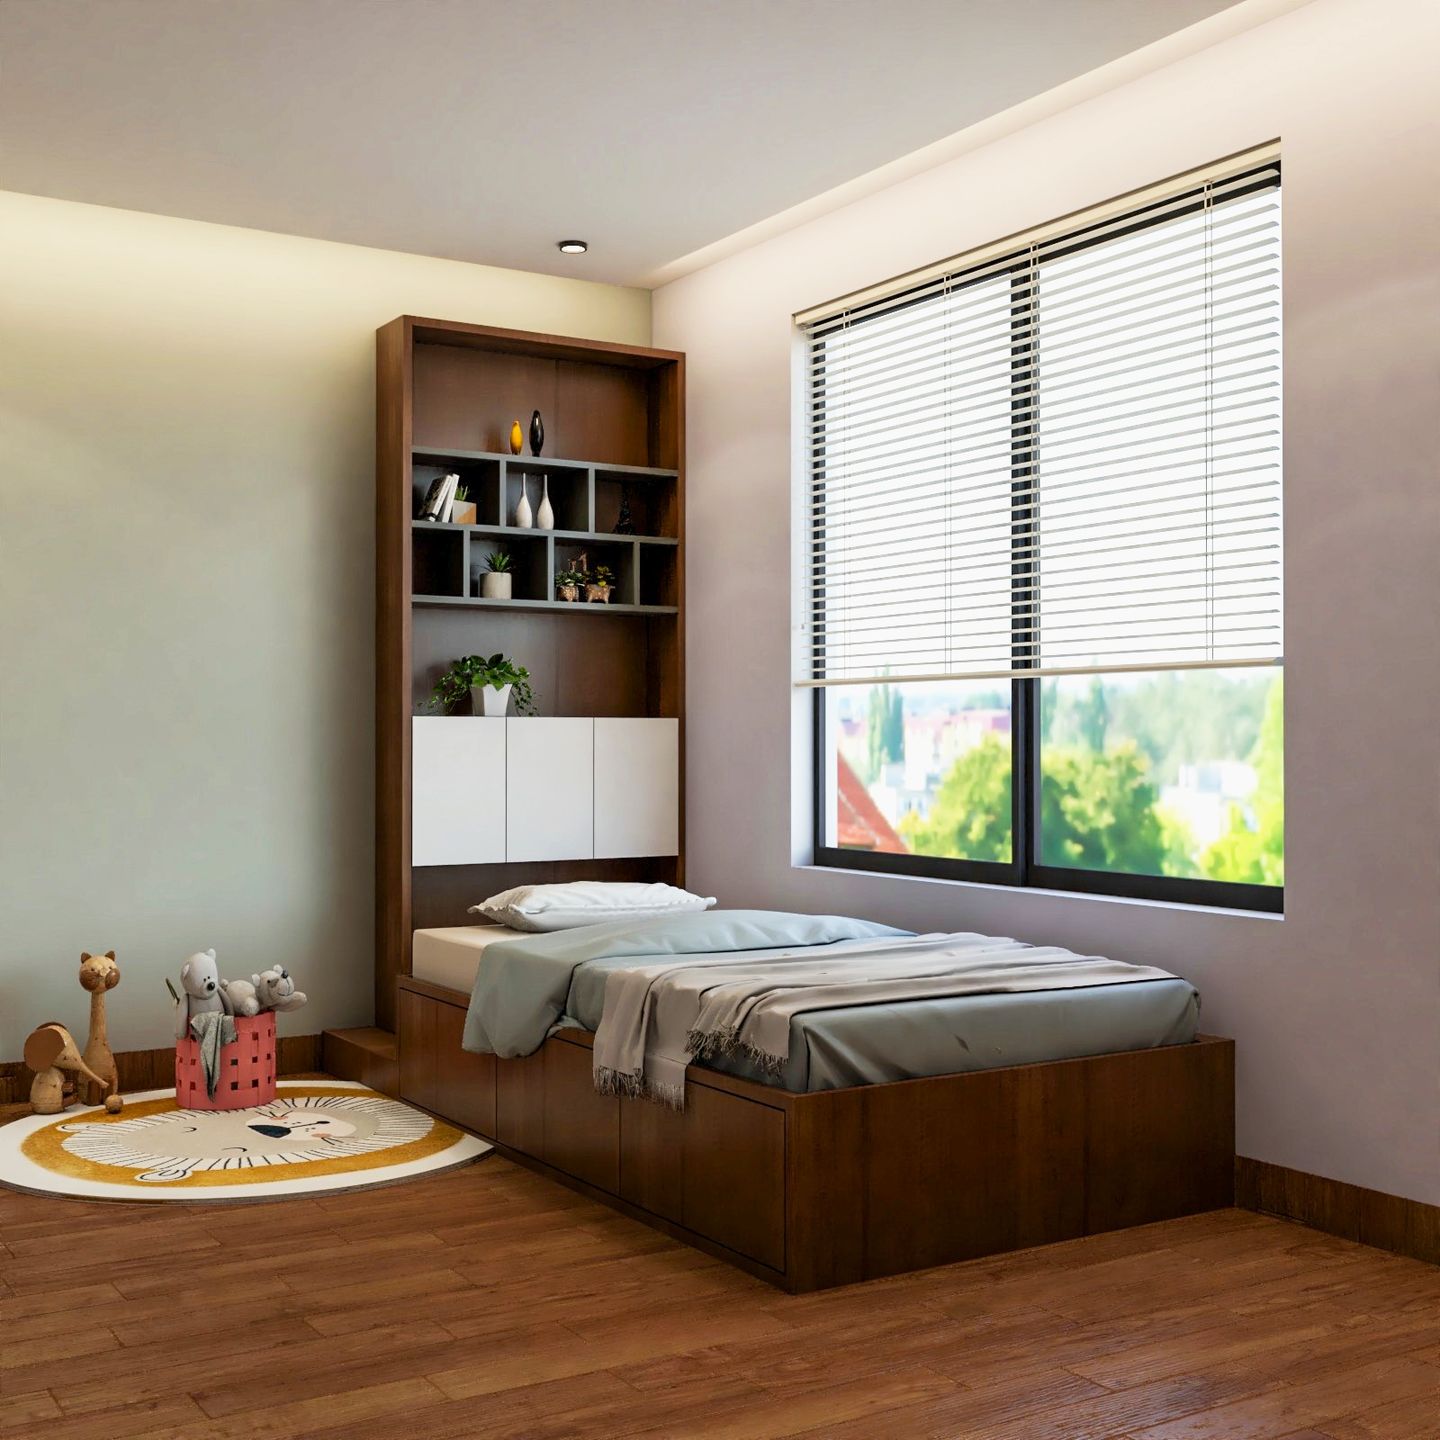 Kids Bedroom Design With Wooden Storage Unit - Livspace